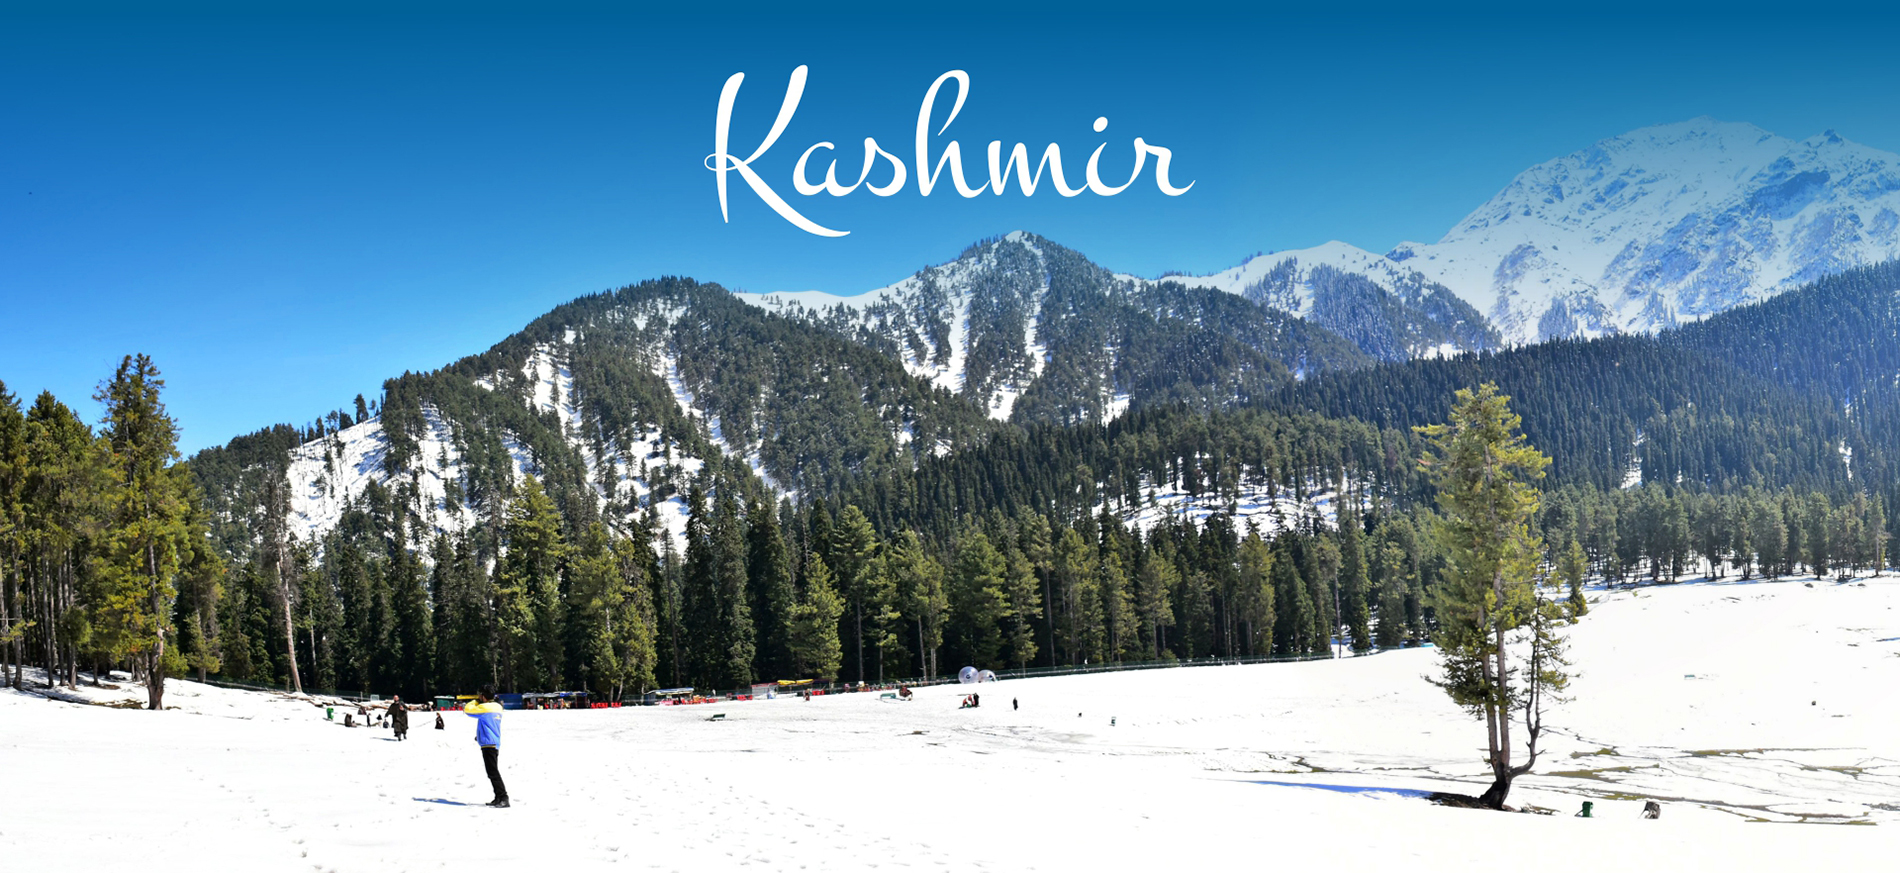 Kashmir Srinagar Tour Packages | Kashmir Tour PackagesTour and TravelsTour PackagesAll Indiaother